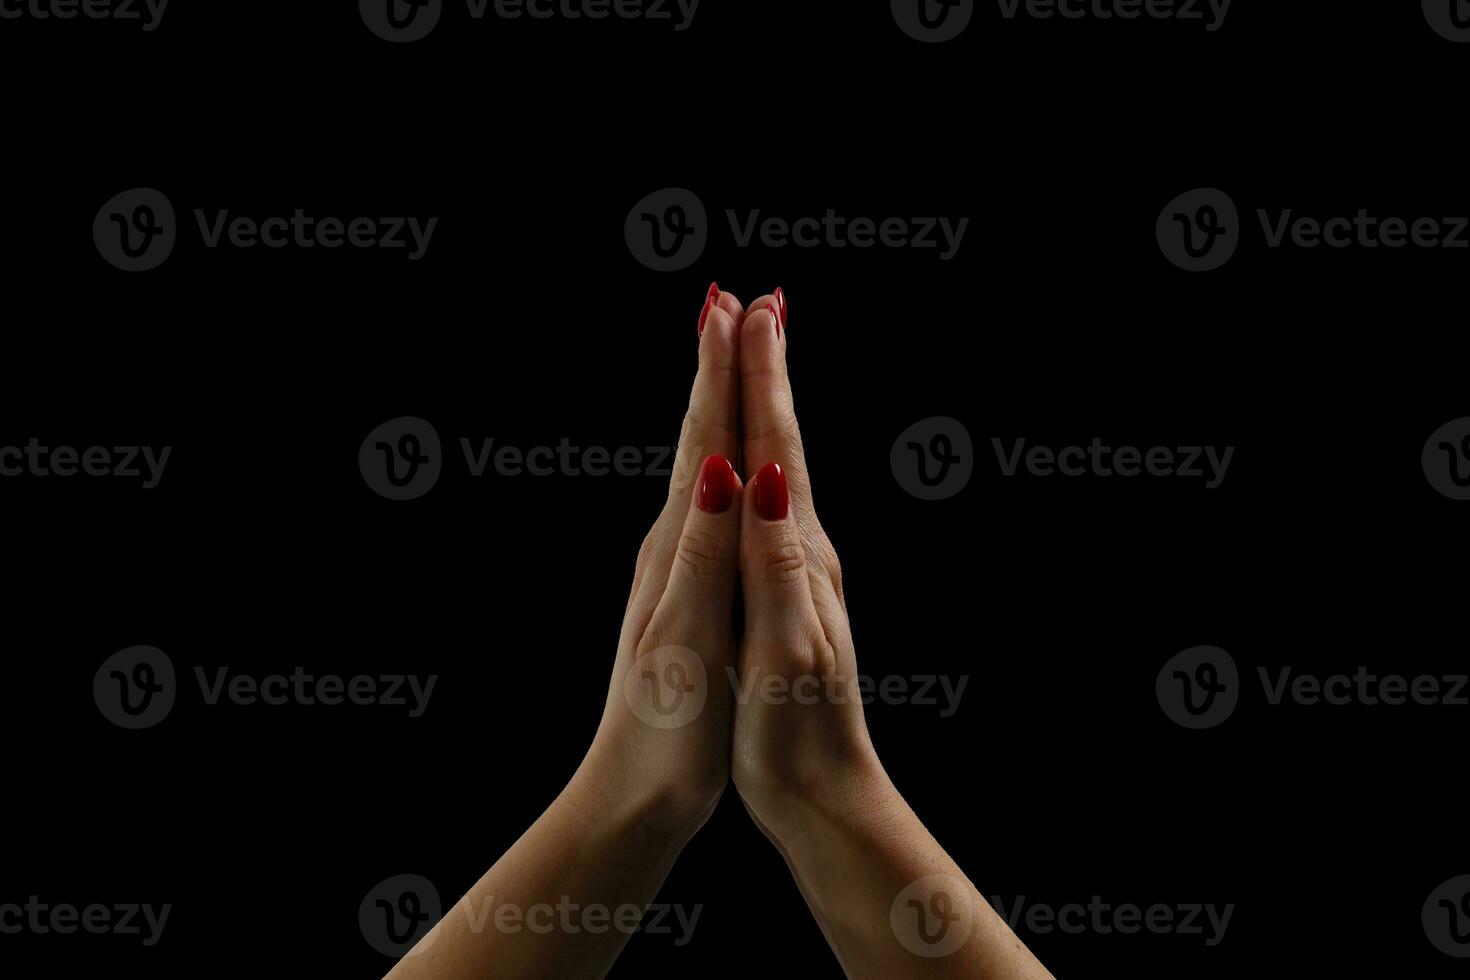 Praying hands on black background photo